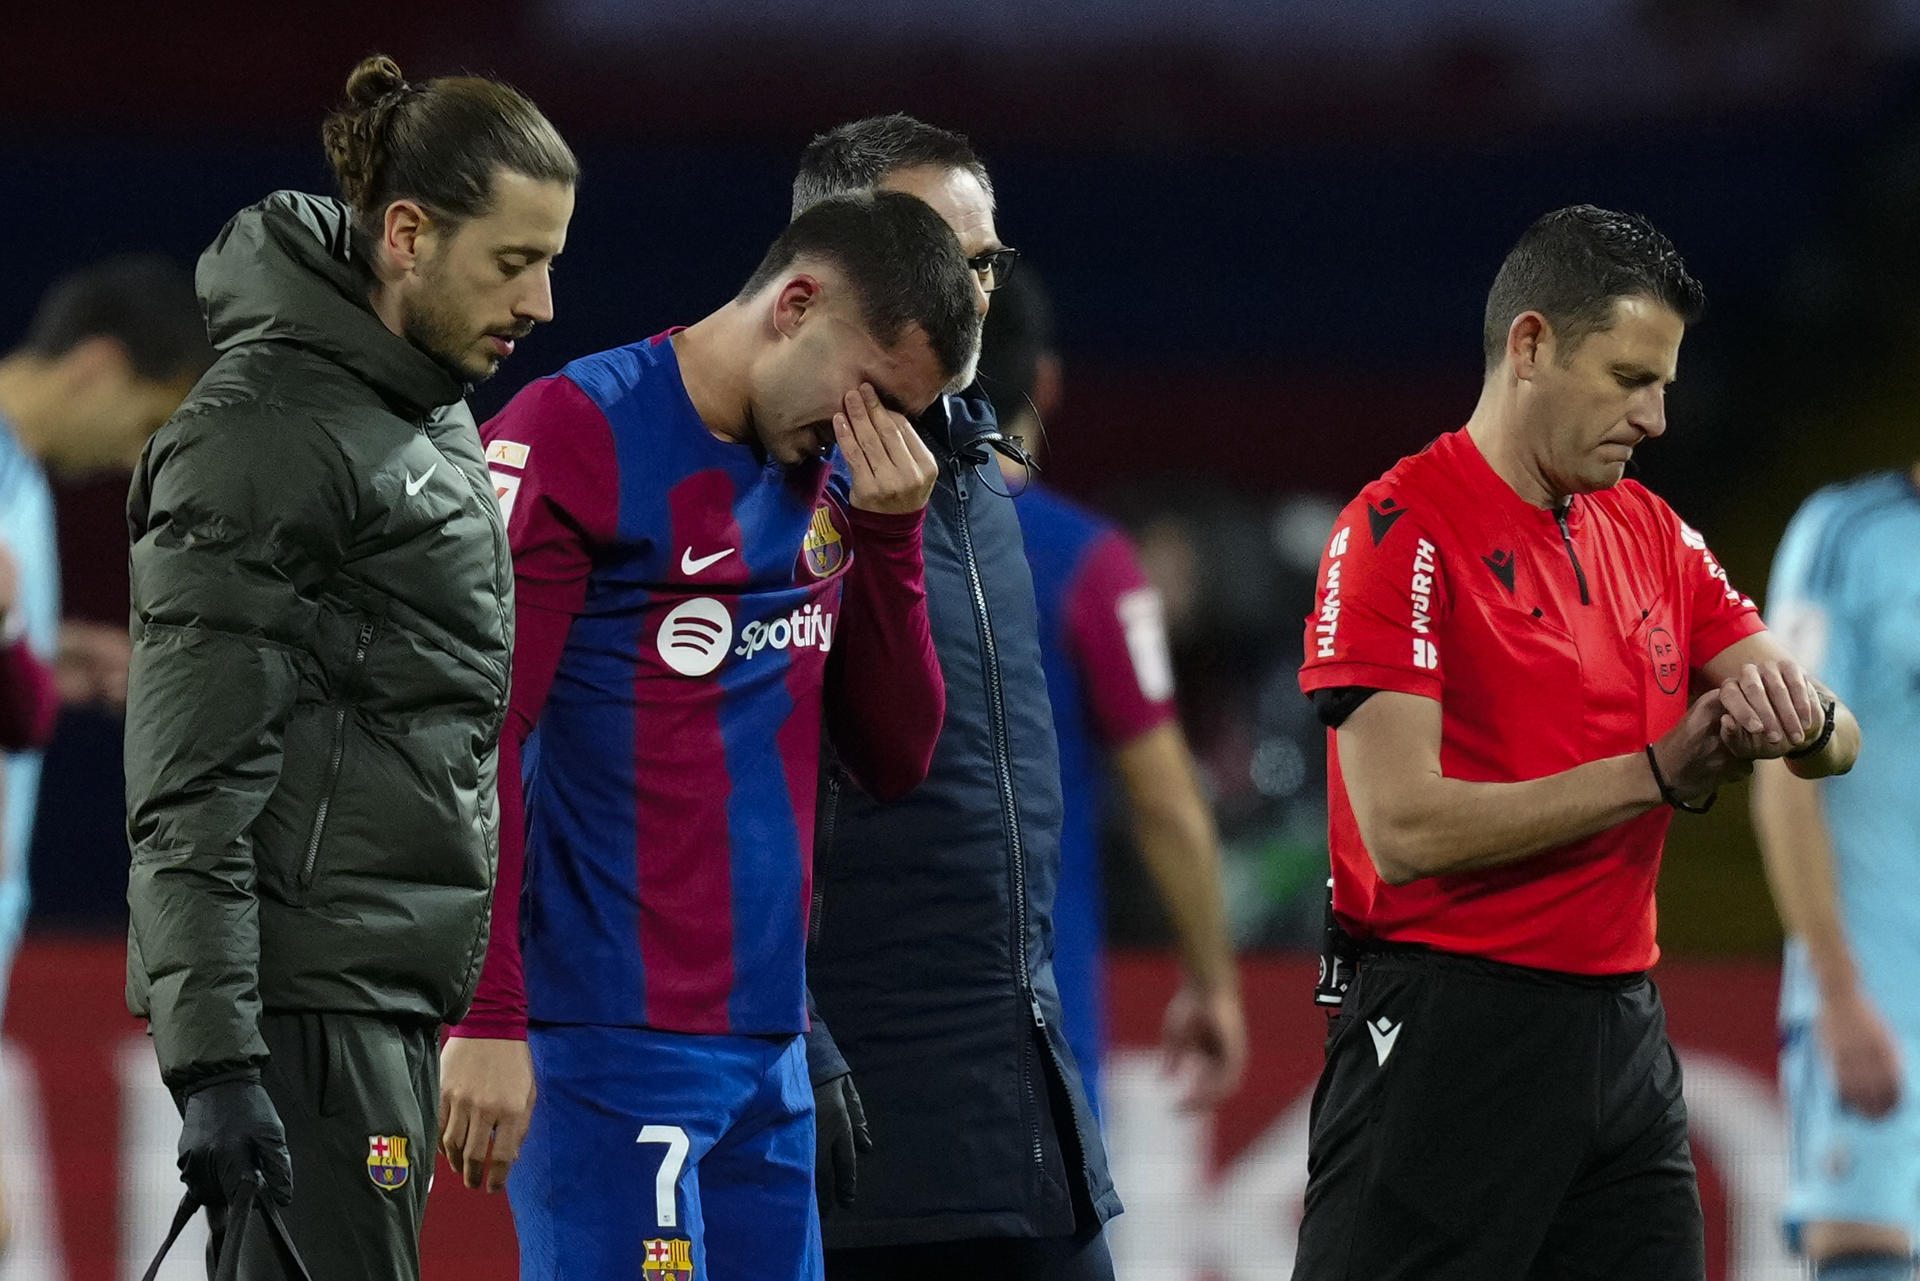 El delantero del Barcelona Ferrán Torres se retira lesionado durante del partido de la jornada 20 de LaLiga EA Sports contra el Osasuna, este miércoles en el Estadi Olímpic Lluís Companys en Barcelona.- EFE/ Enric Fontcuberta